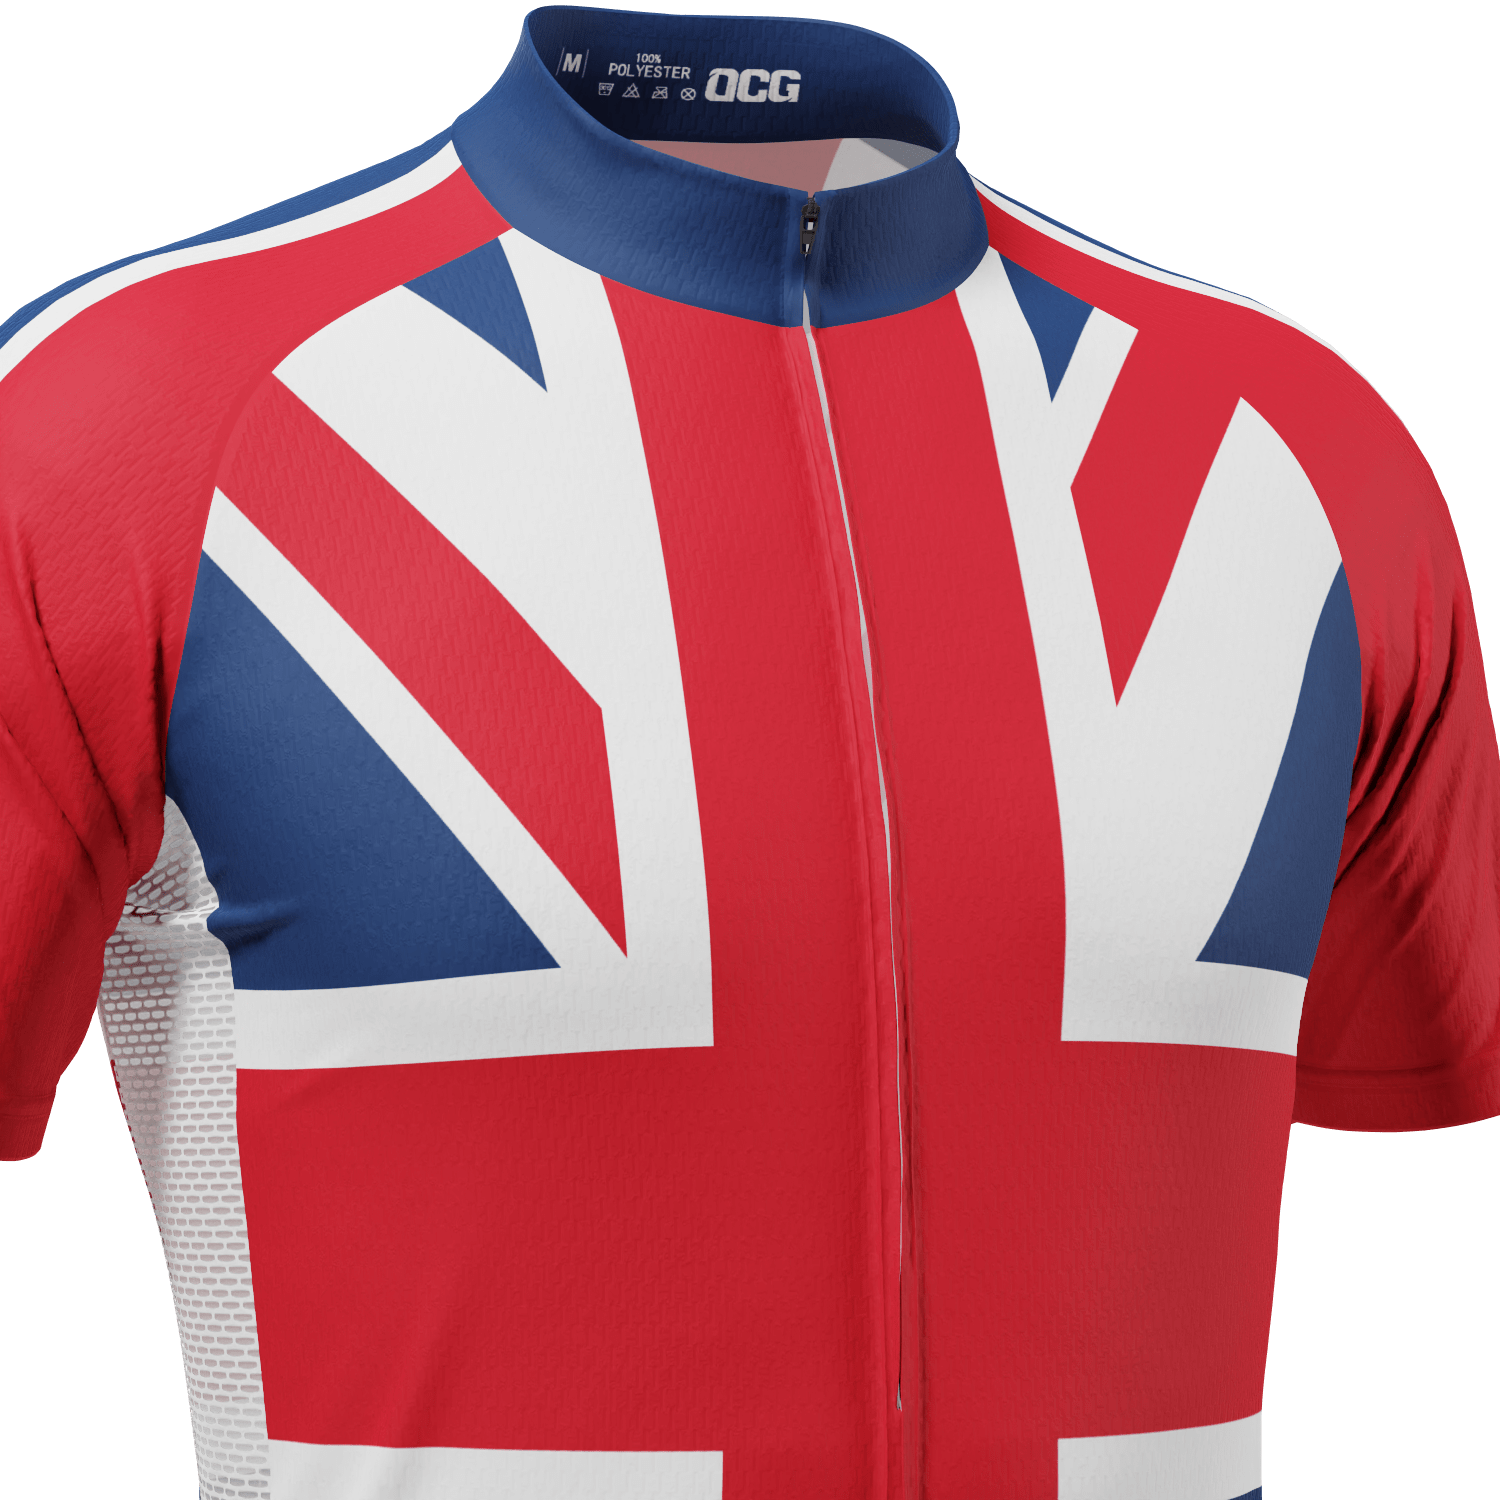 Union Jack Men's UK Short Sleeve Cycling Jersey